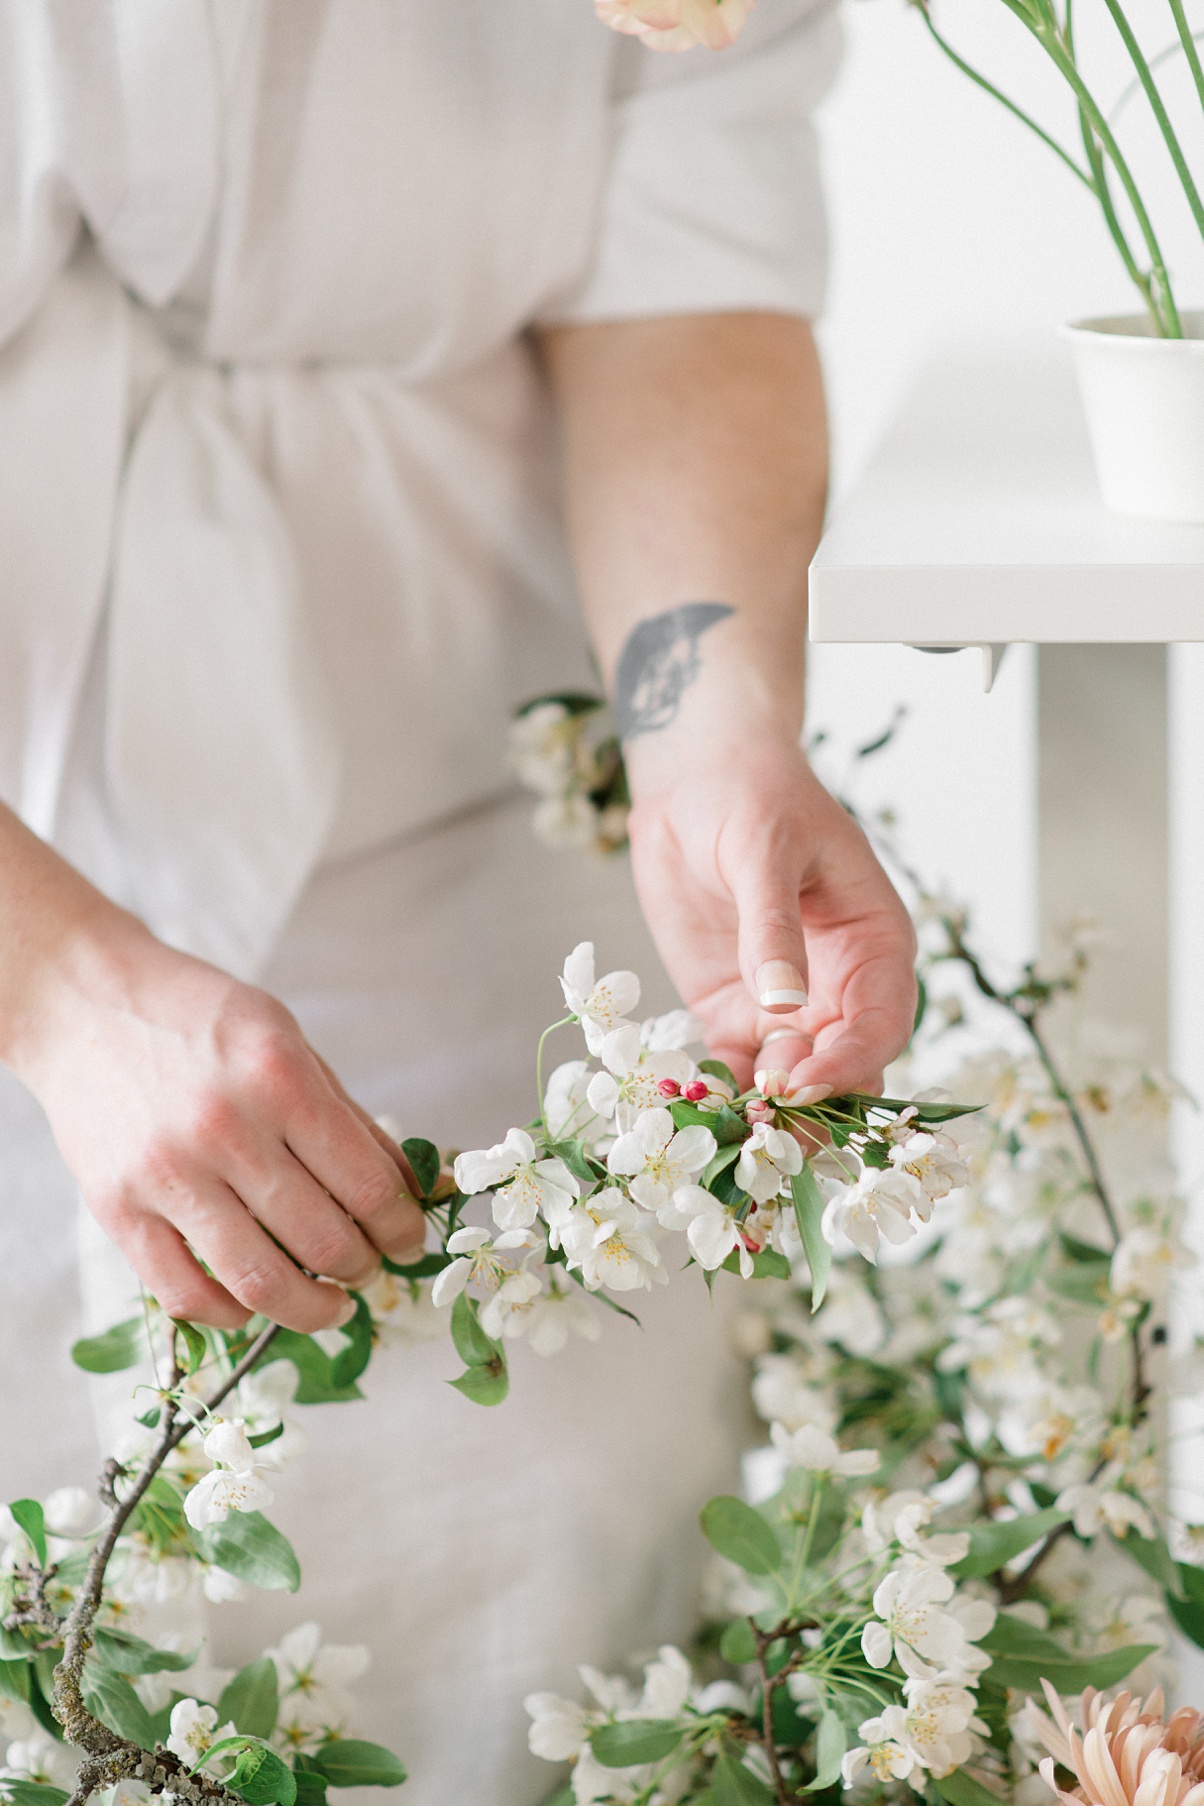 Seattle wedding florist Carolyn Kulb, owner of Bloom Poet, handling crabapple branches